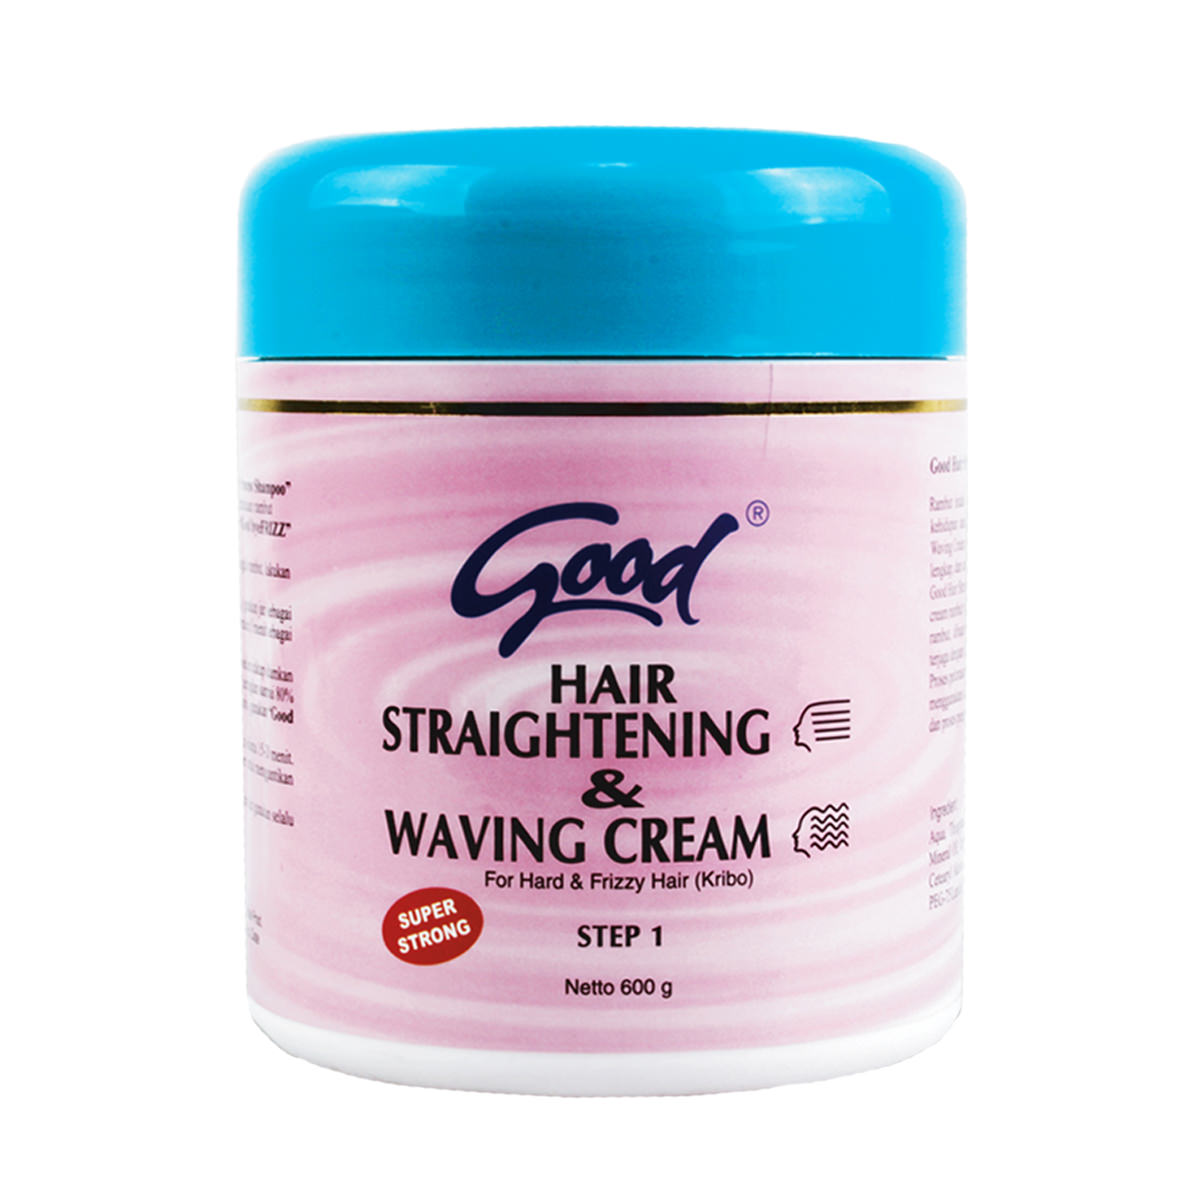 Good-HaiAr-Straightening-Waving-Cream-Super-Strong-(600-g)-sfw(1)